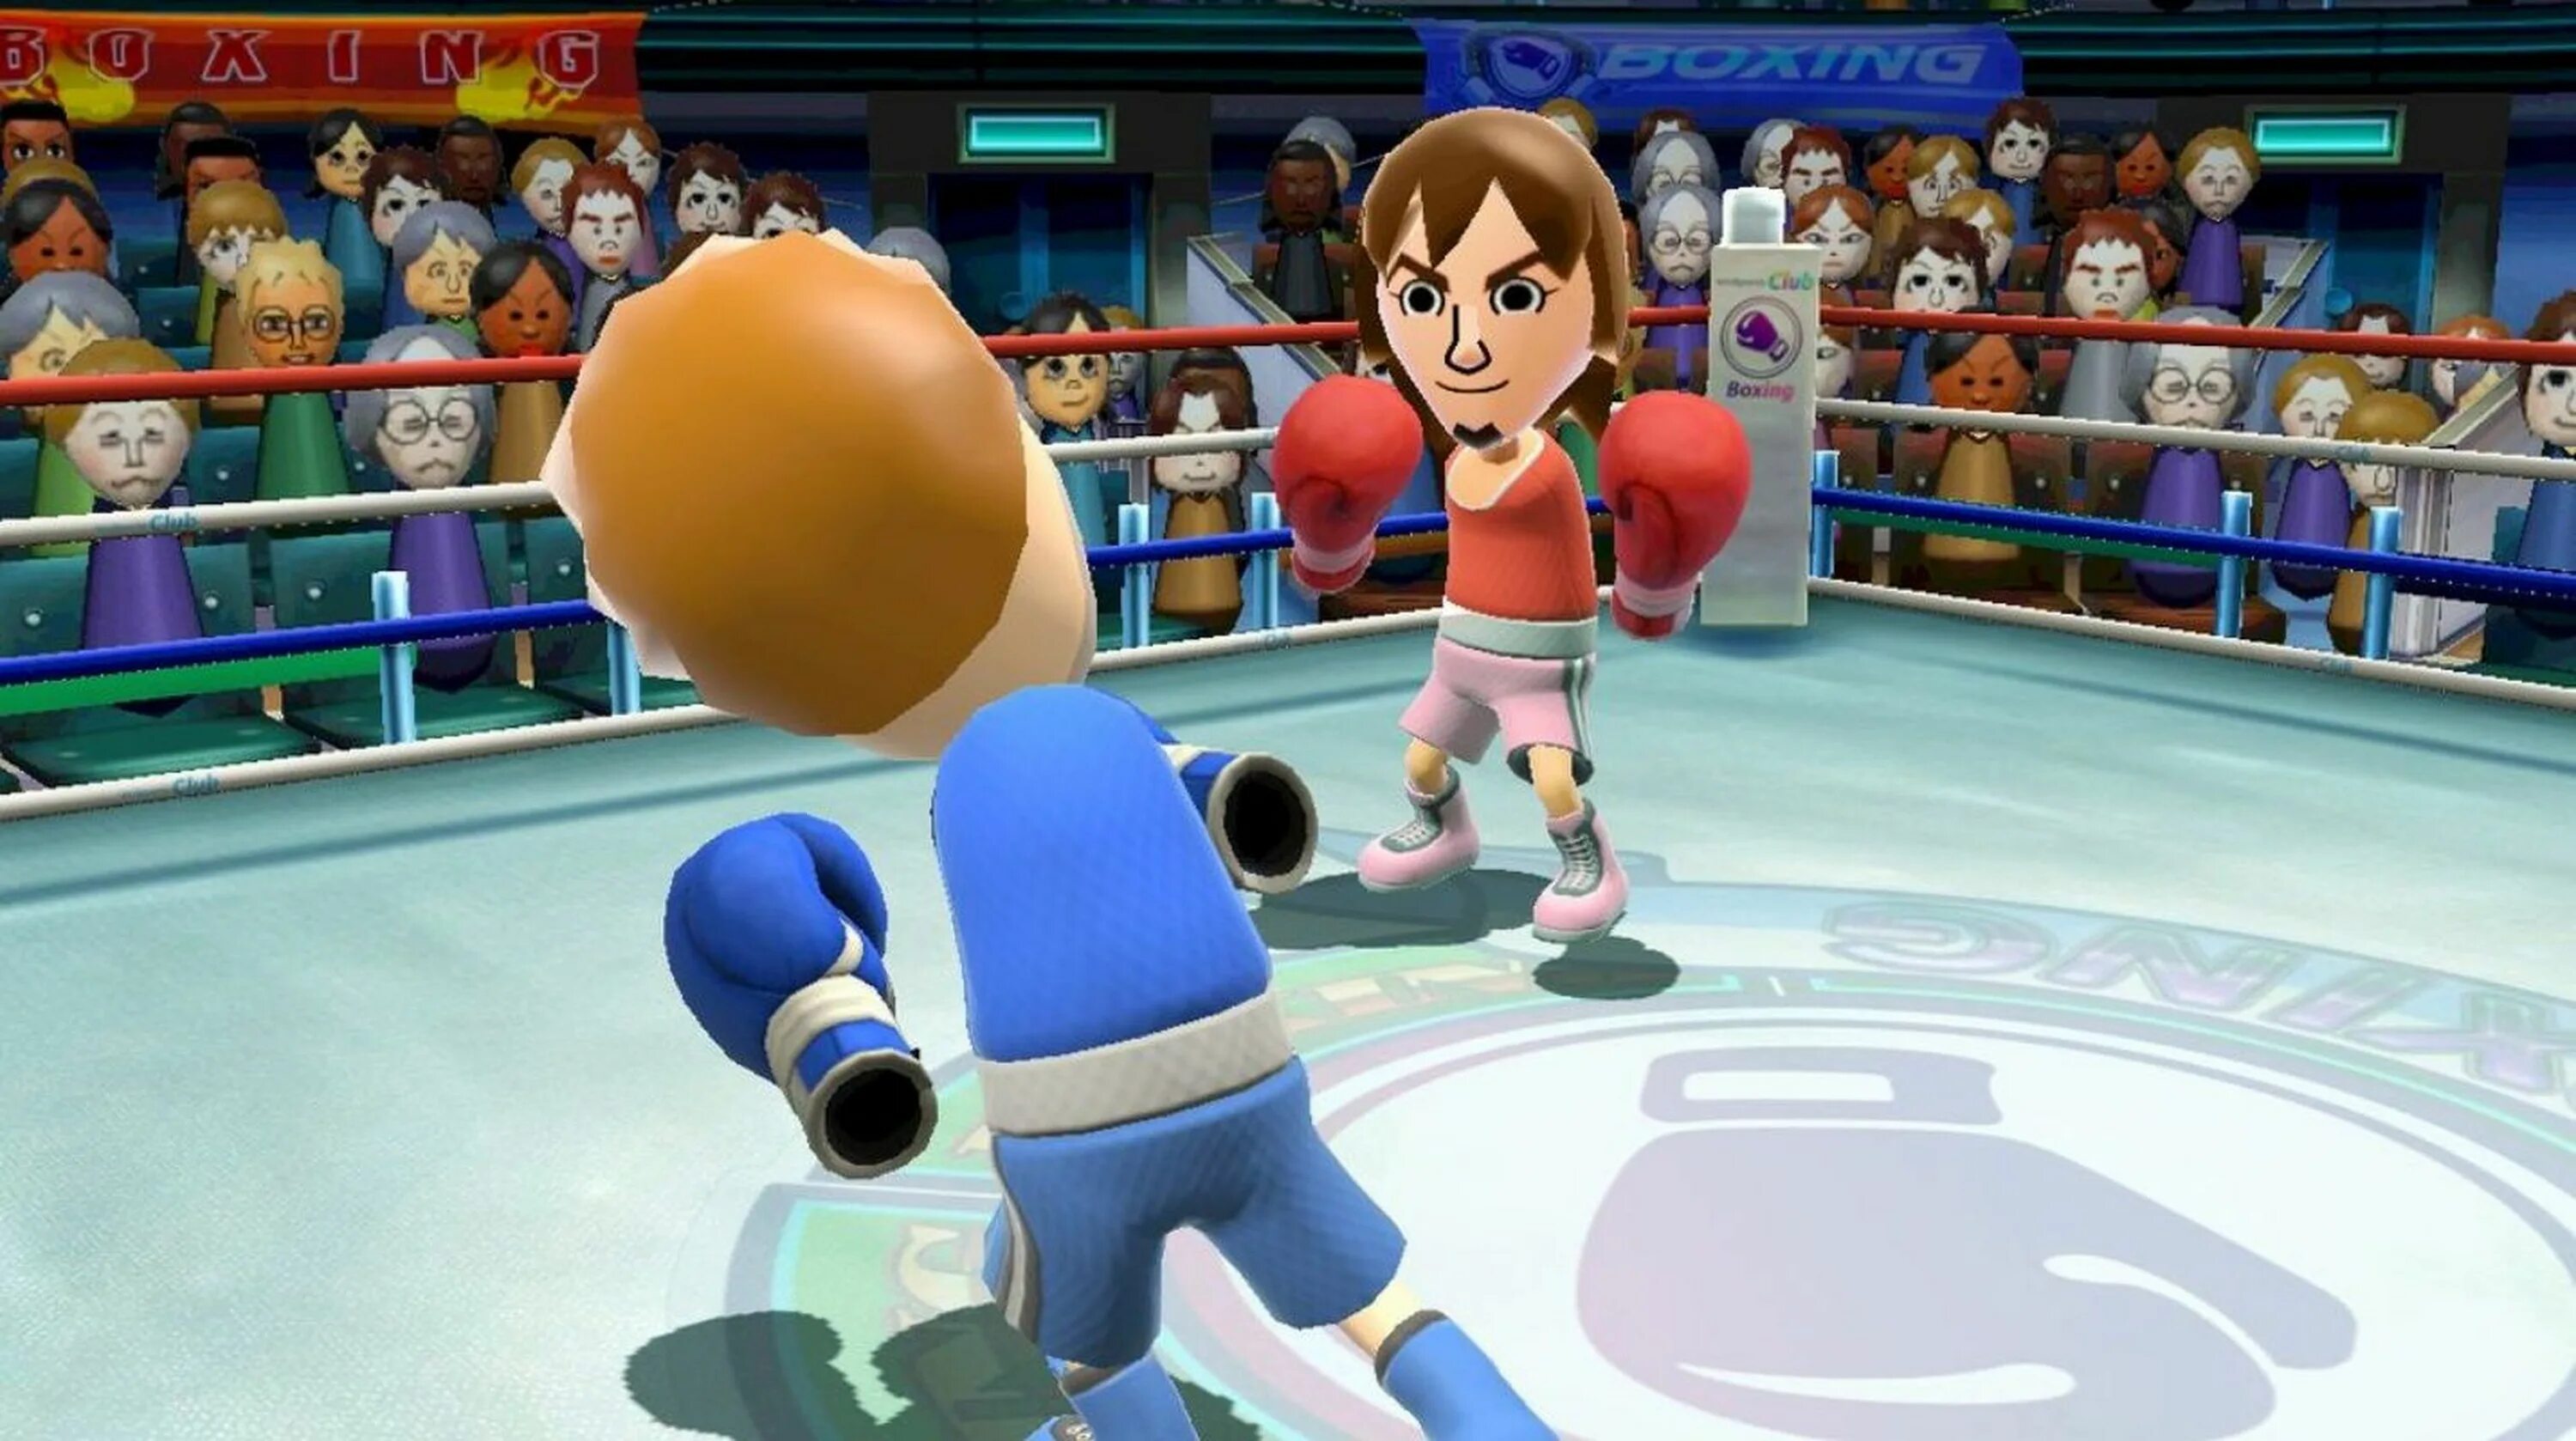 Том гол игра. Wii Sports 2006. Wii Wii Sports. Нинтендо Wii игры. Nintendo Wii игры спорт.